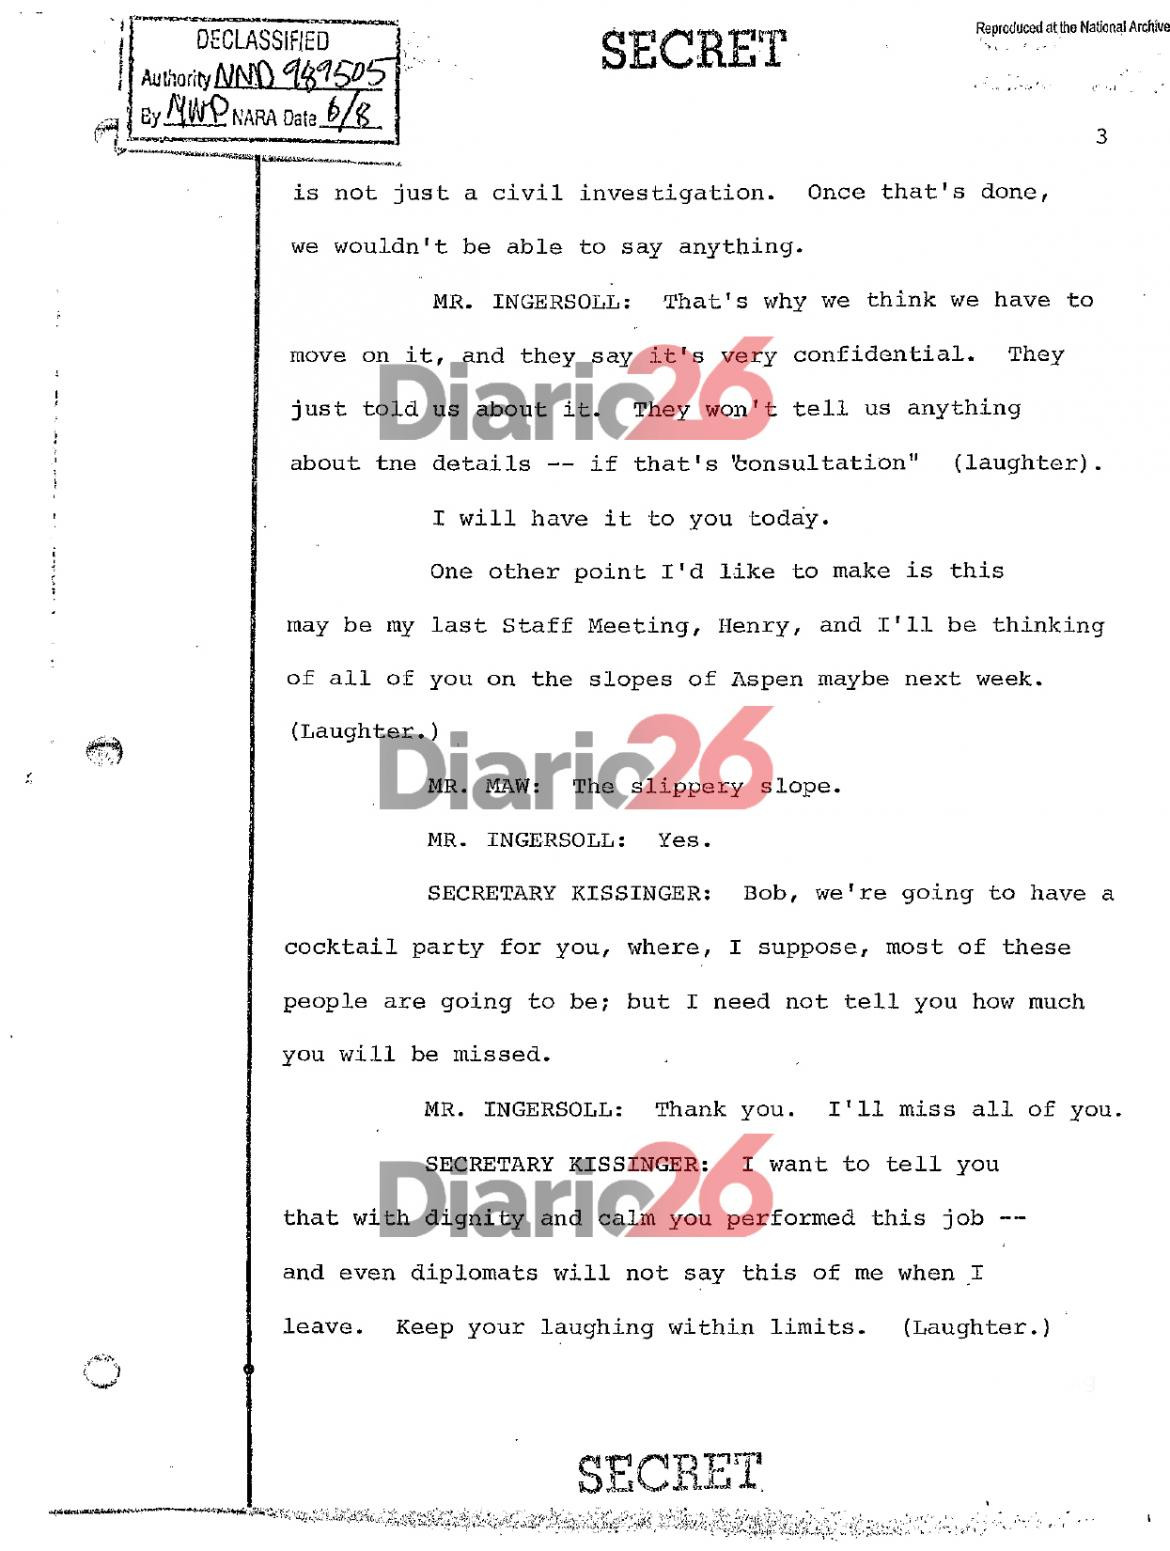 24 de marzo de 1976, golpe militar, dictadura militar en Argentina, documentos de Estados Unidos, Kissinger